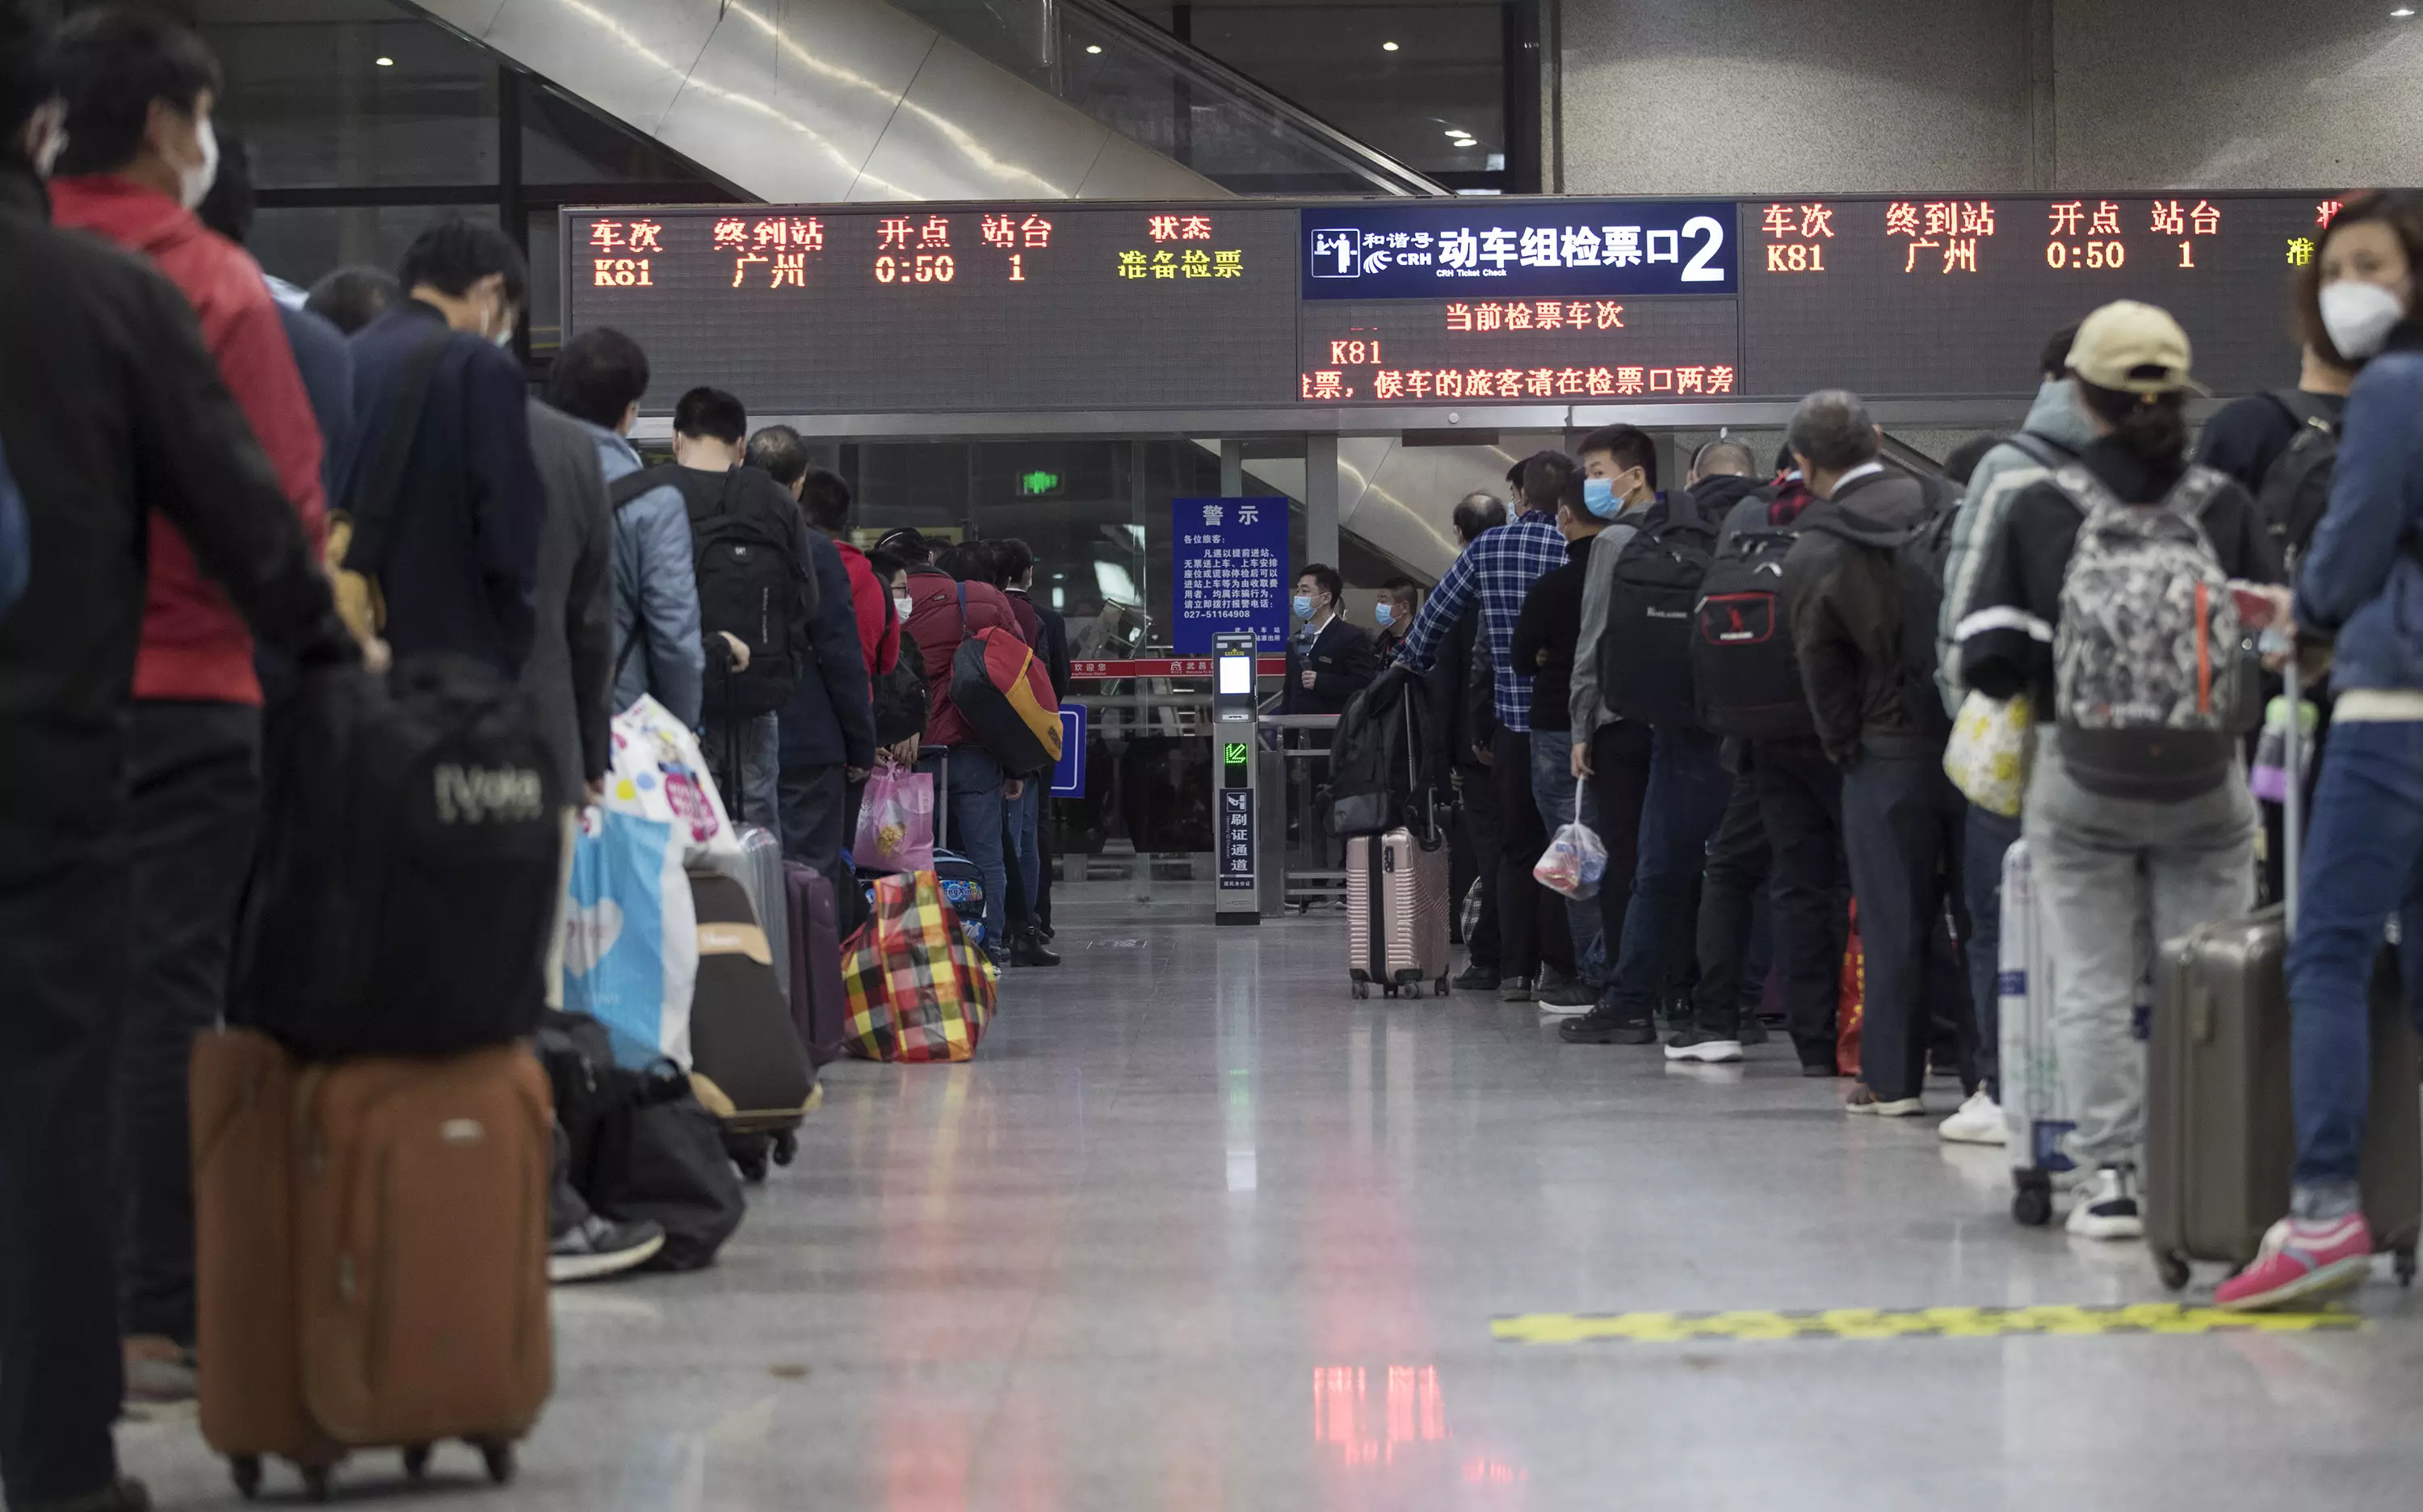 Passengers wait in line for train K81 at Wuchang Railway Station in Wuhan.